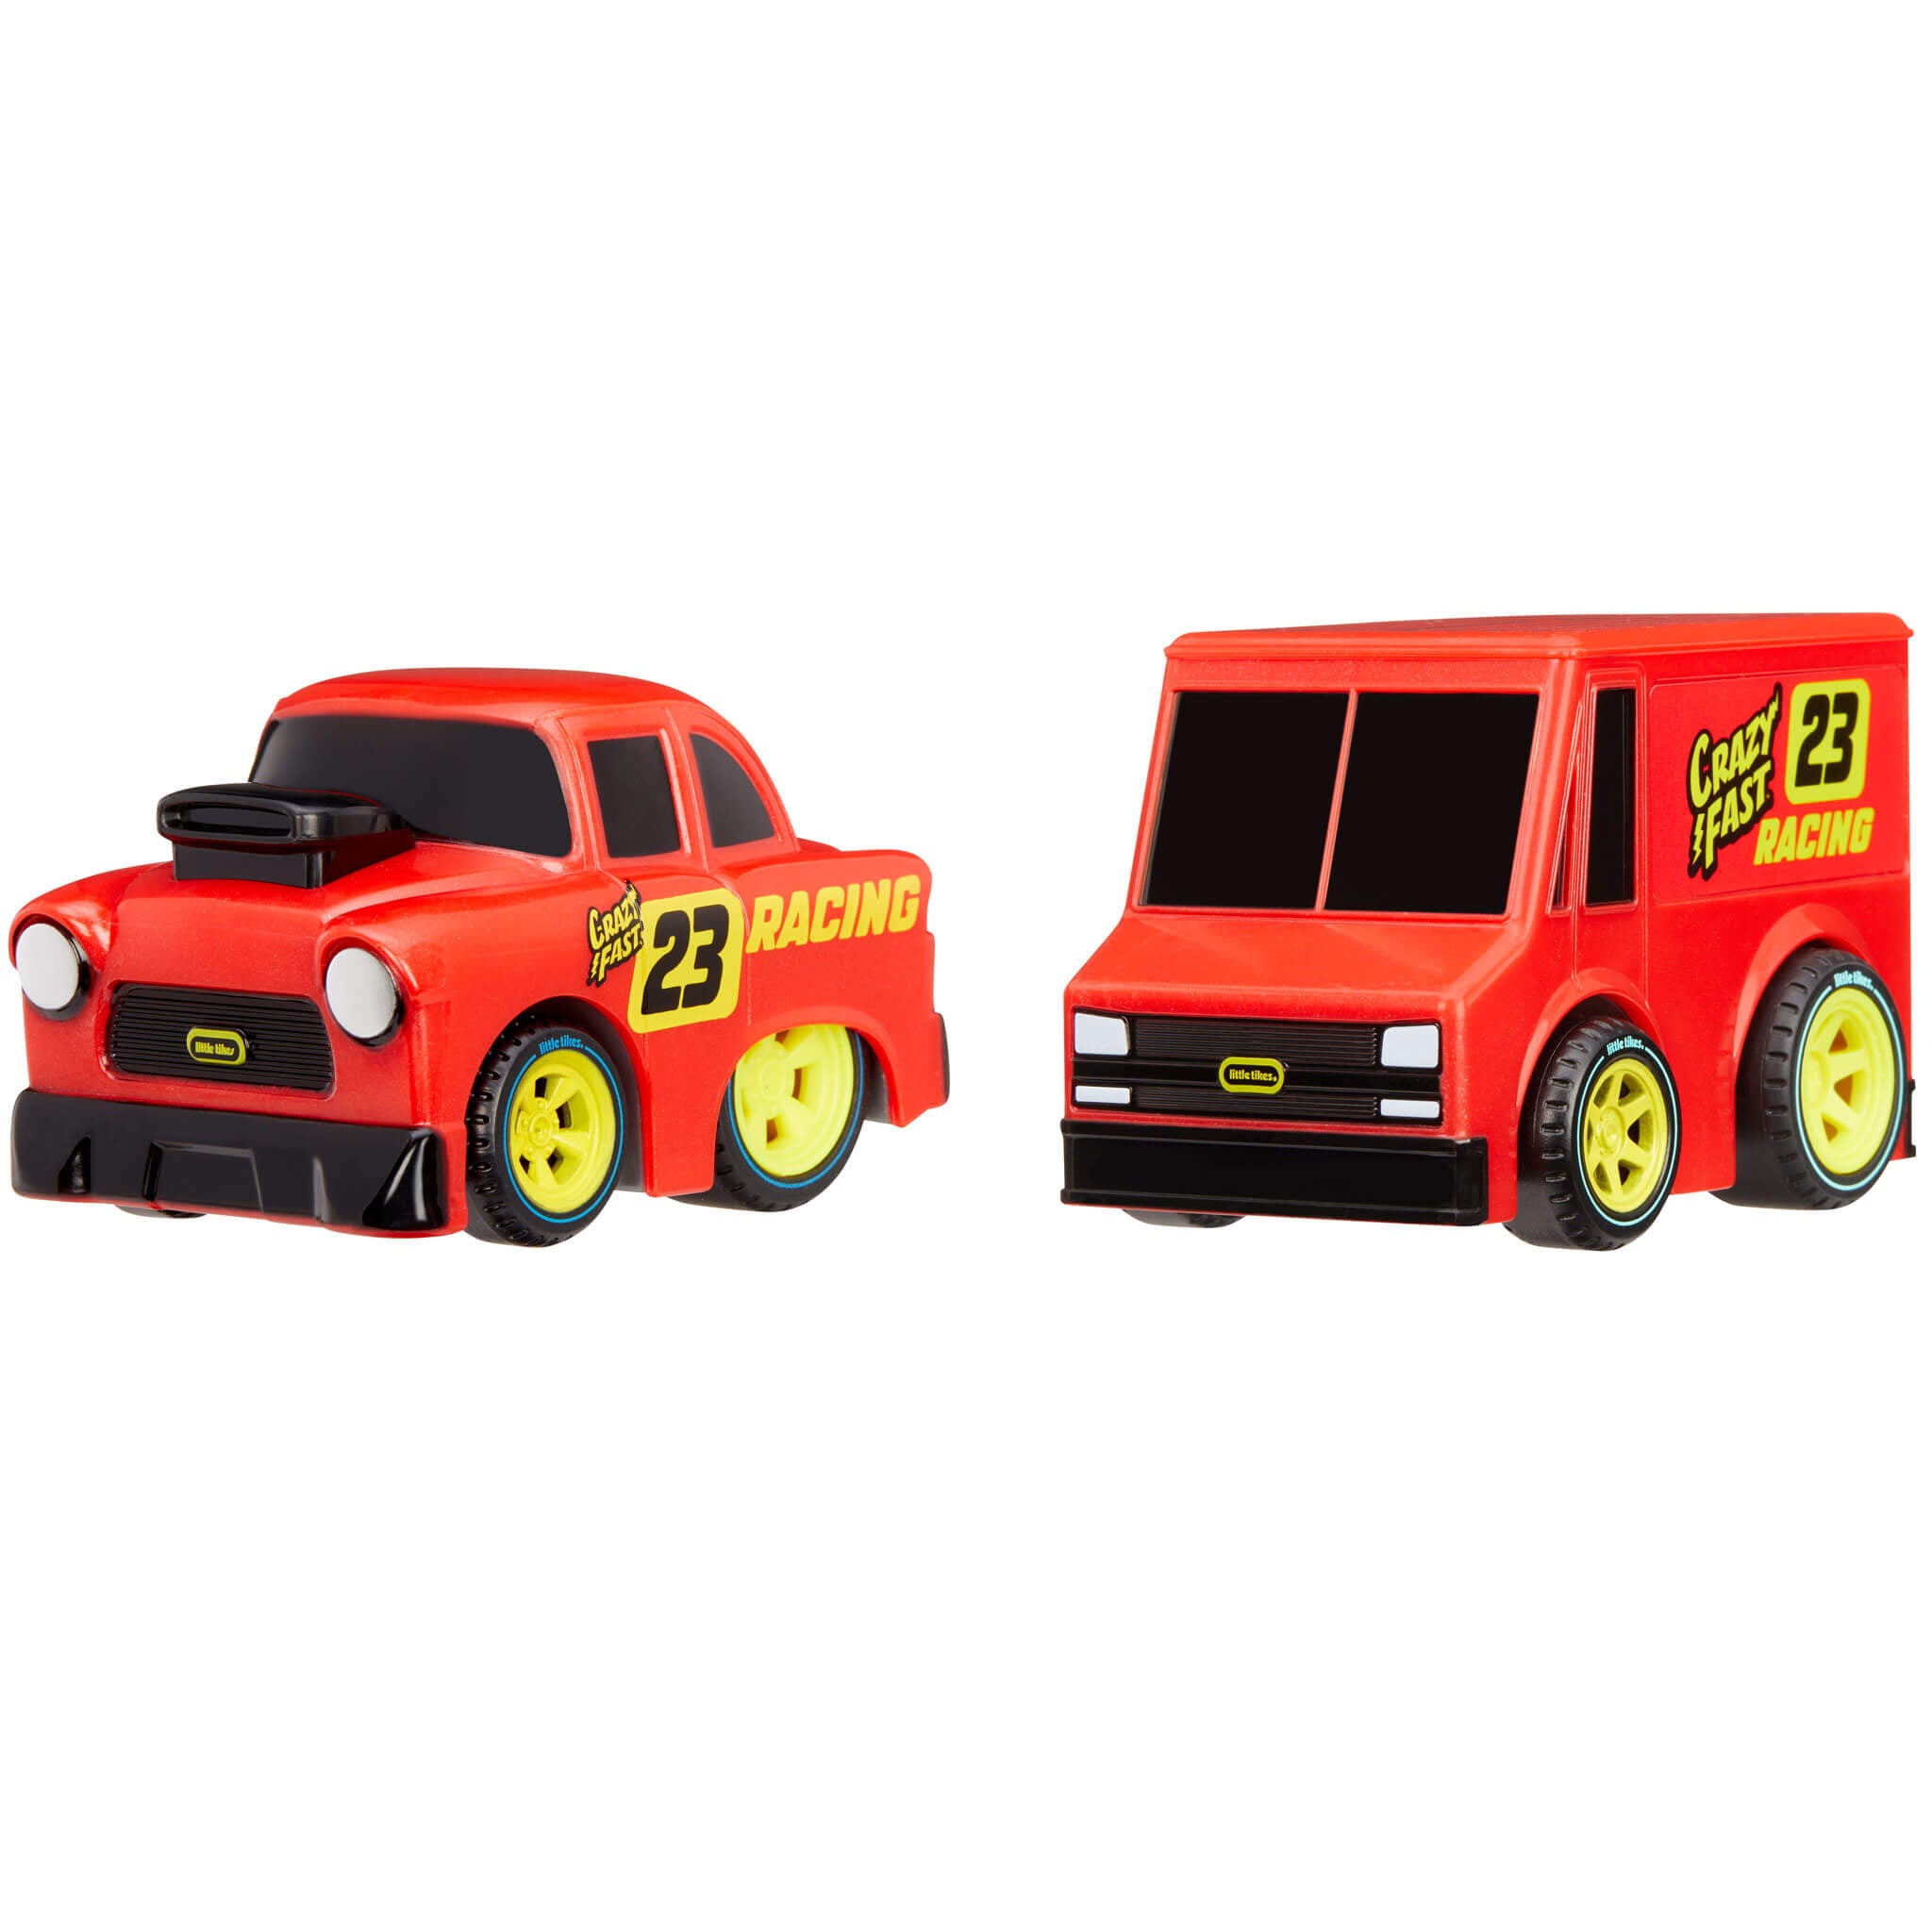 Car Mini Waffle Maker - Make 7 Fun, Different Race Cars, Trucks, and Automobile